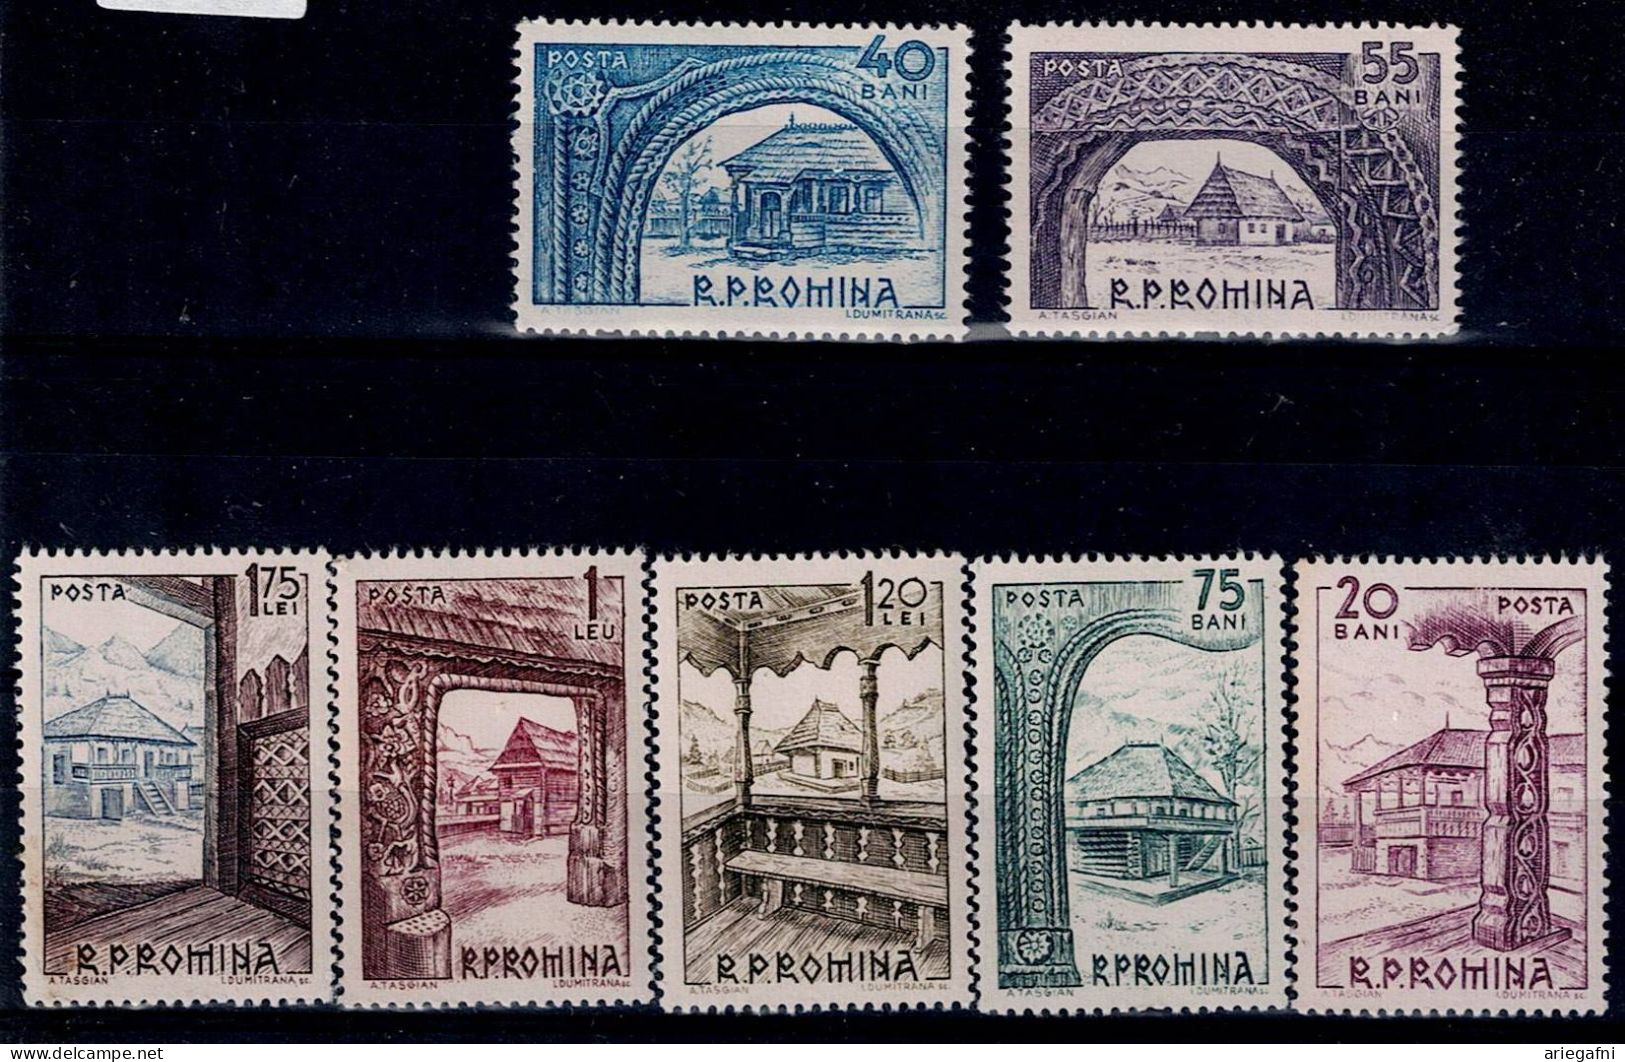 ROMANIA 1963 OPEN-AIR MUSEUM OF OLD FARMHOUSES MI No 2222-8 MNH VF!! - Nuevos